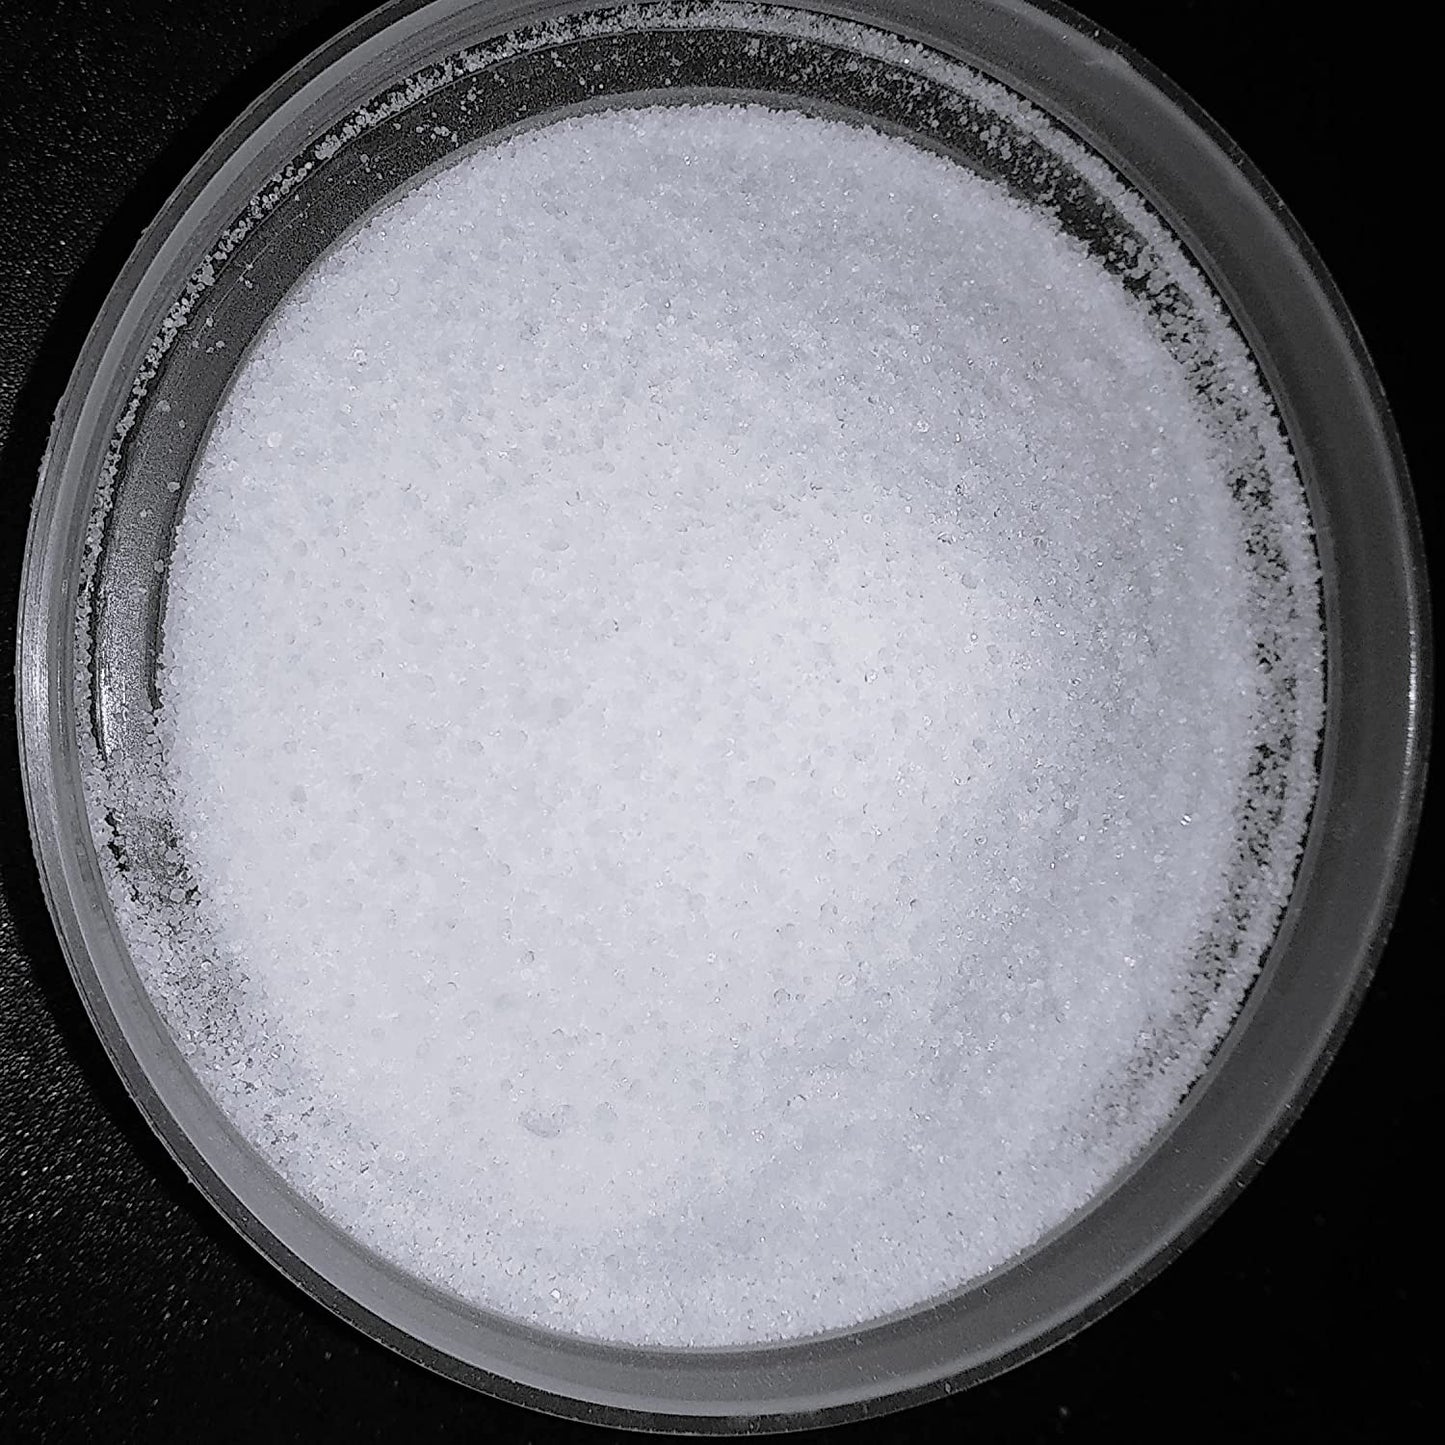 Panchsheel Water-Soluble Potassium Sulphate Plant Fertilizer Powder (100g)